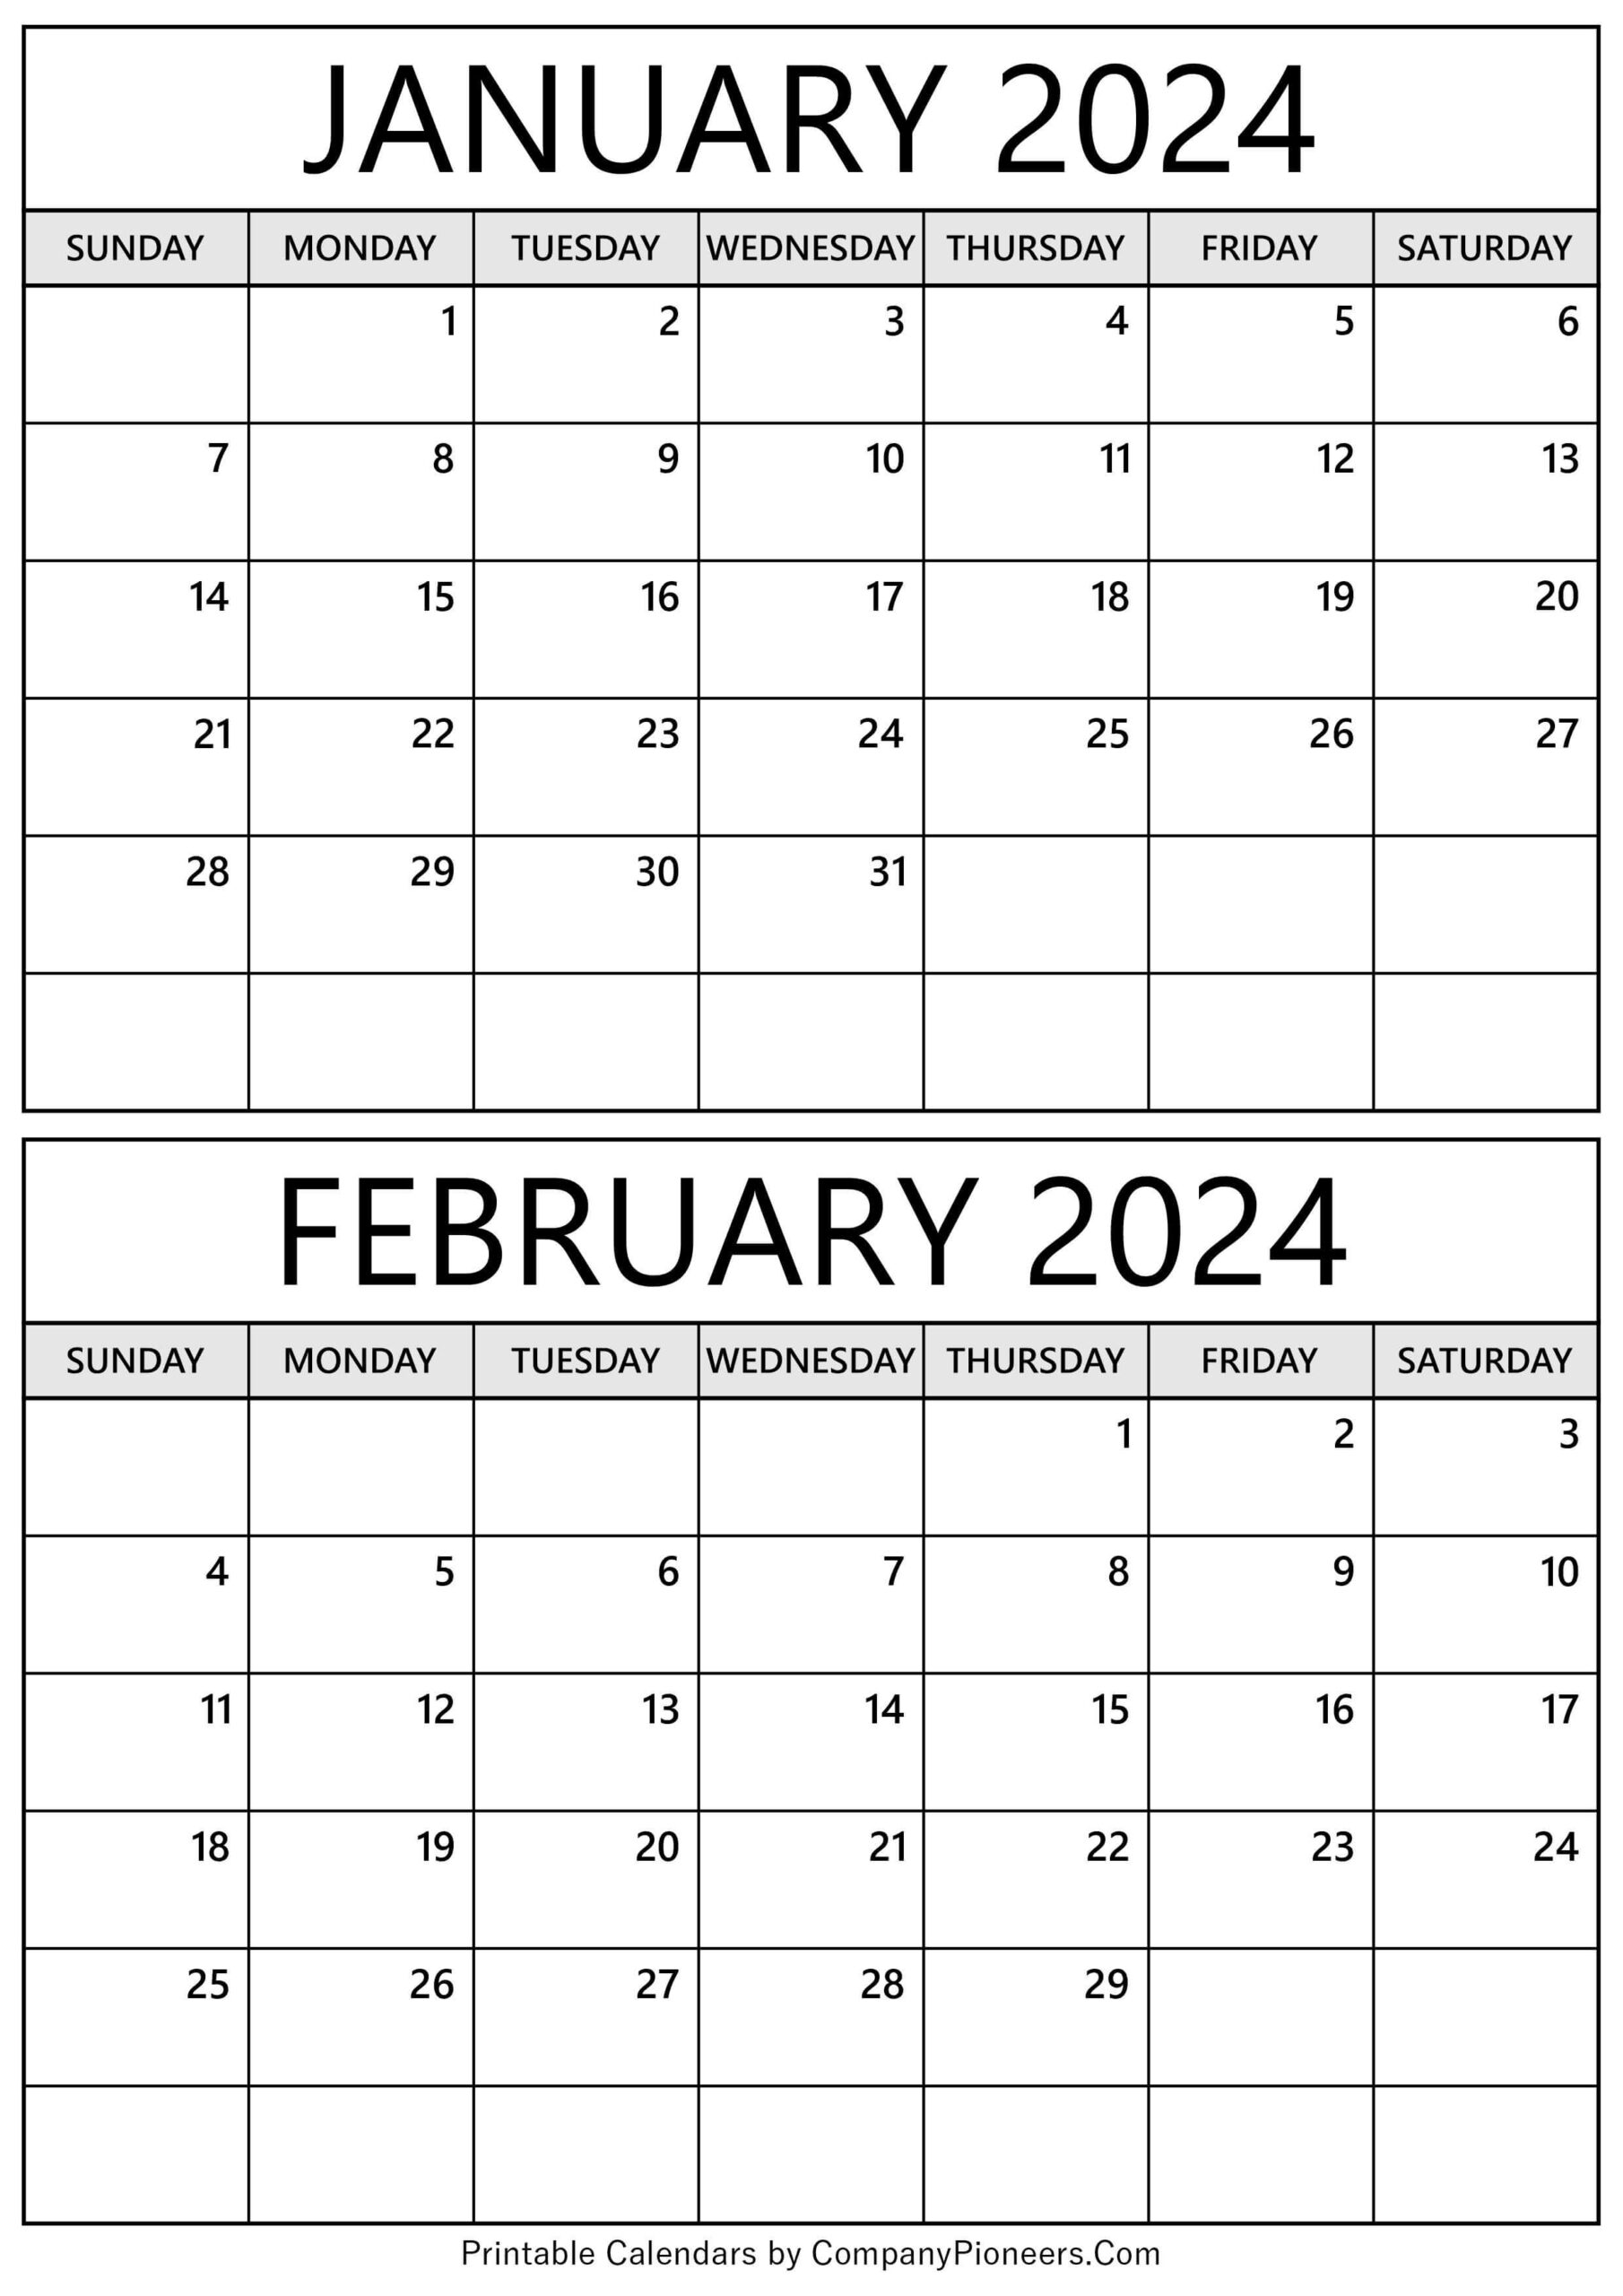 January February 2024 Calendar Printable - Template for January And February 2024 Calendar Free Printable